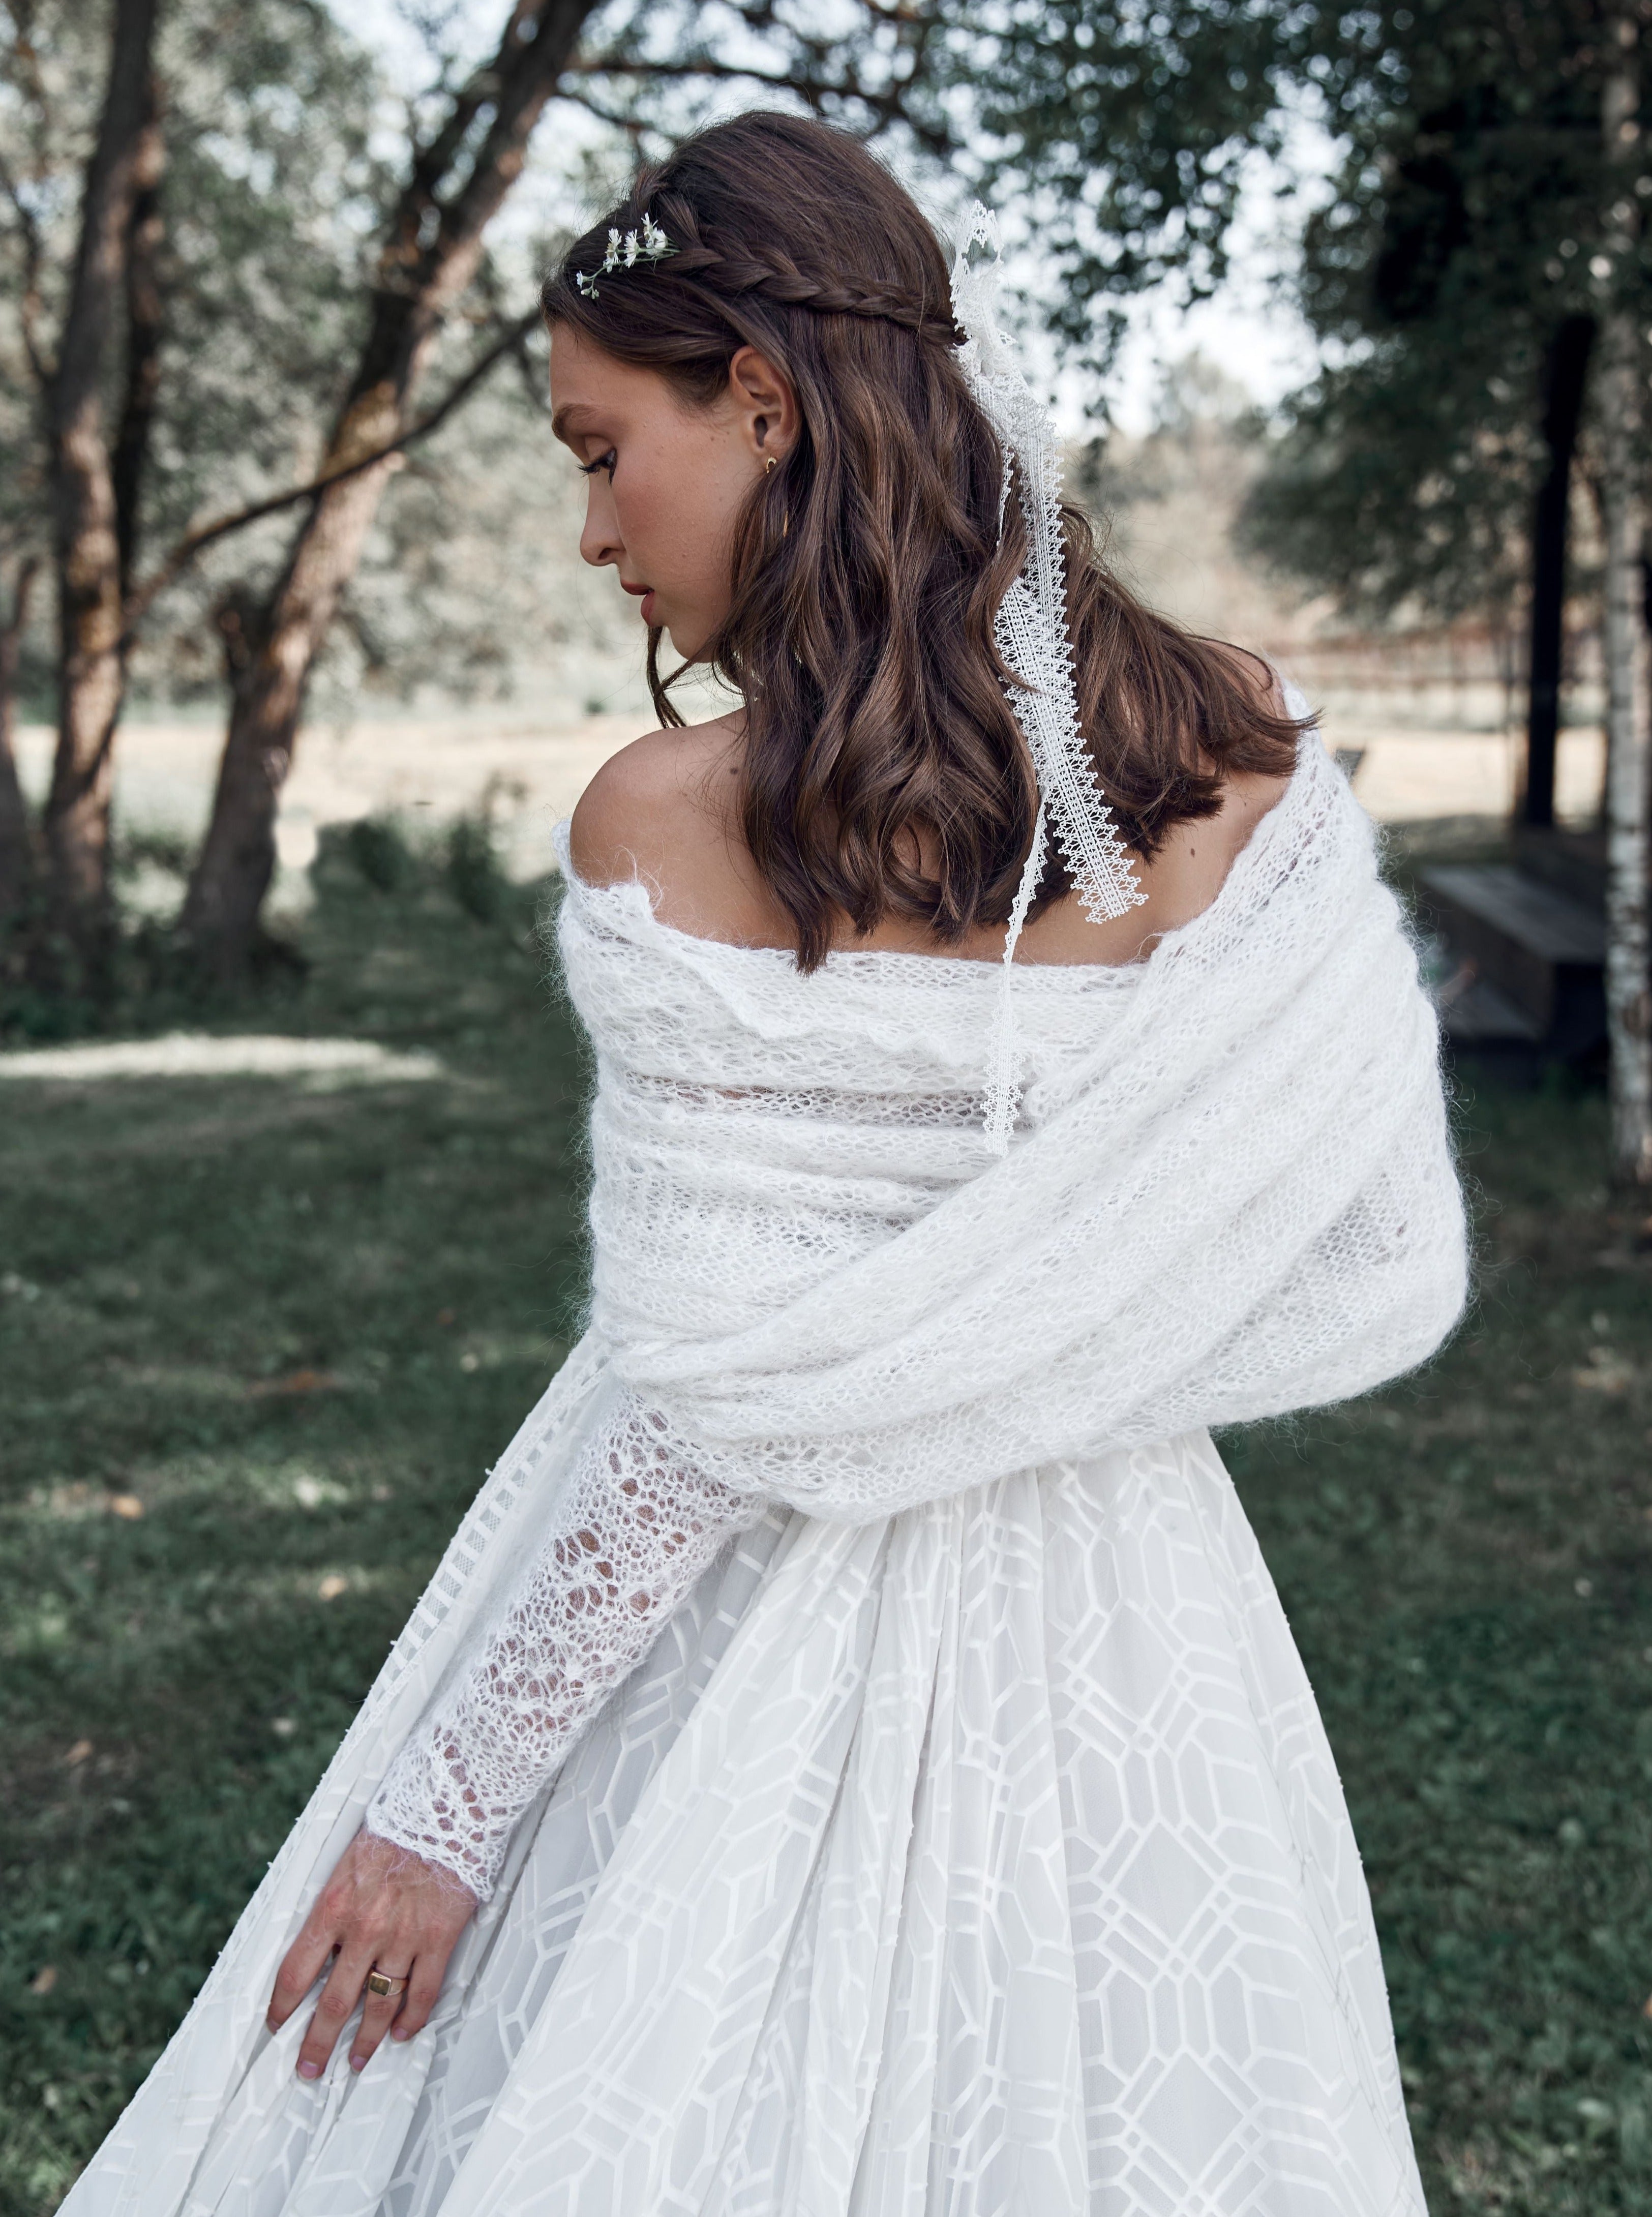 Handmade knitted shawl